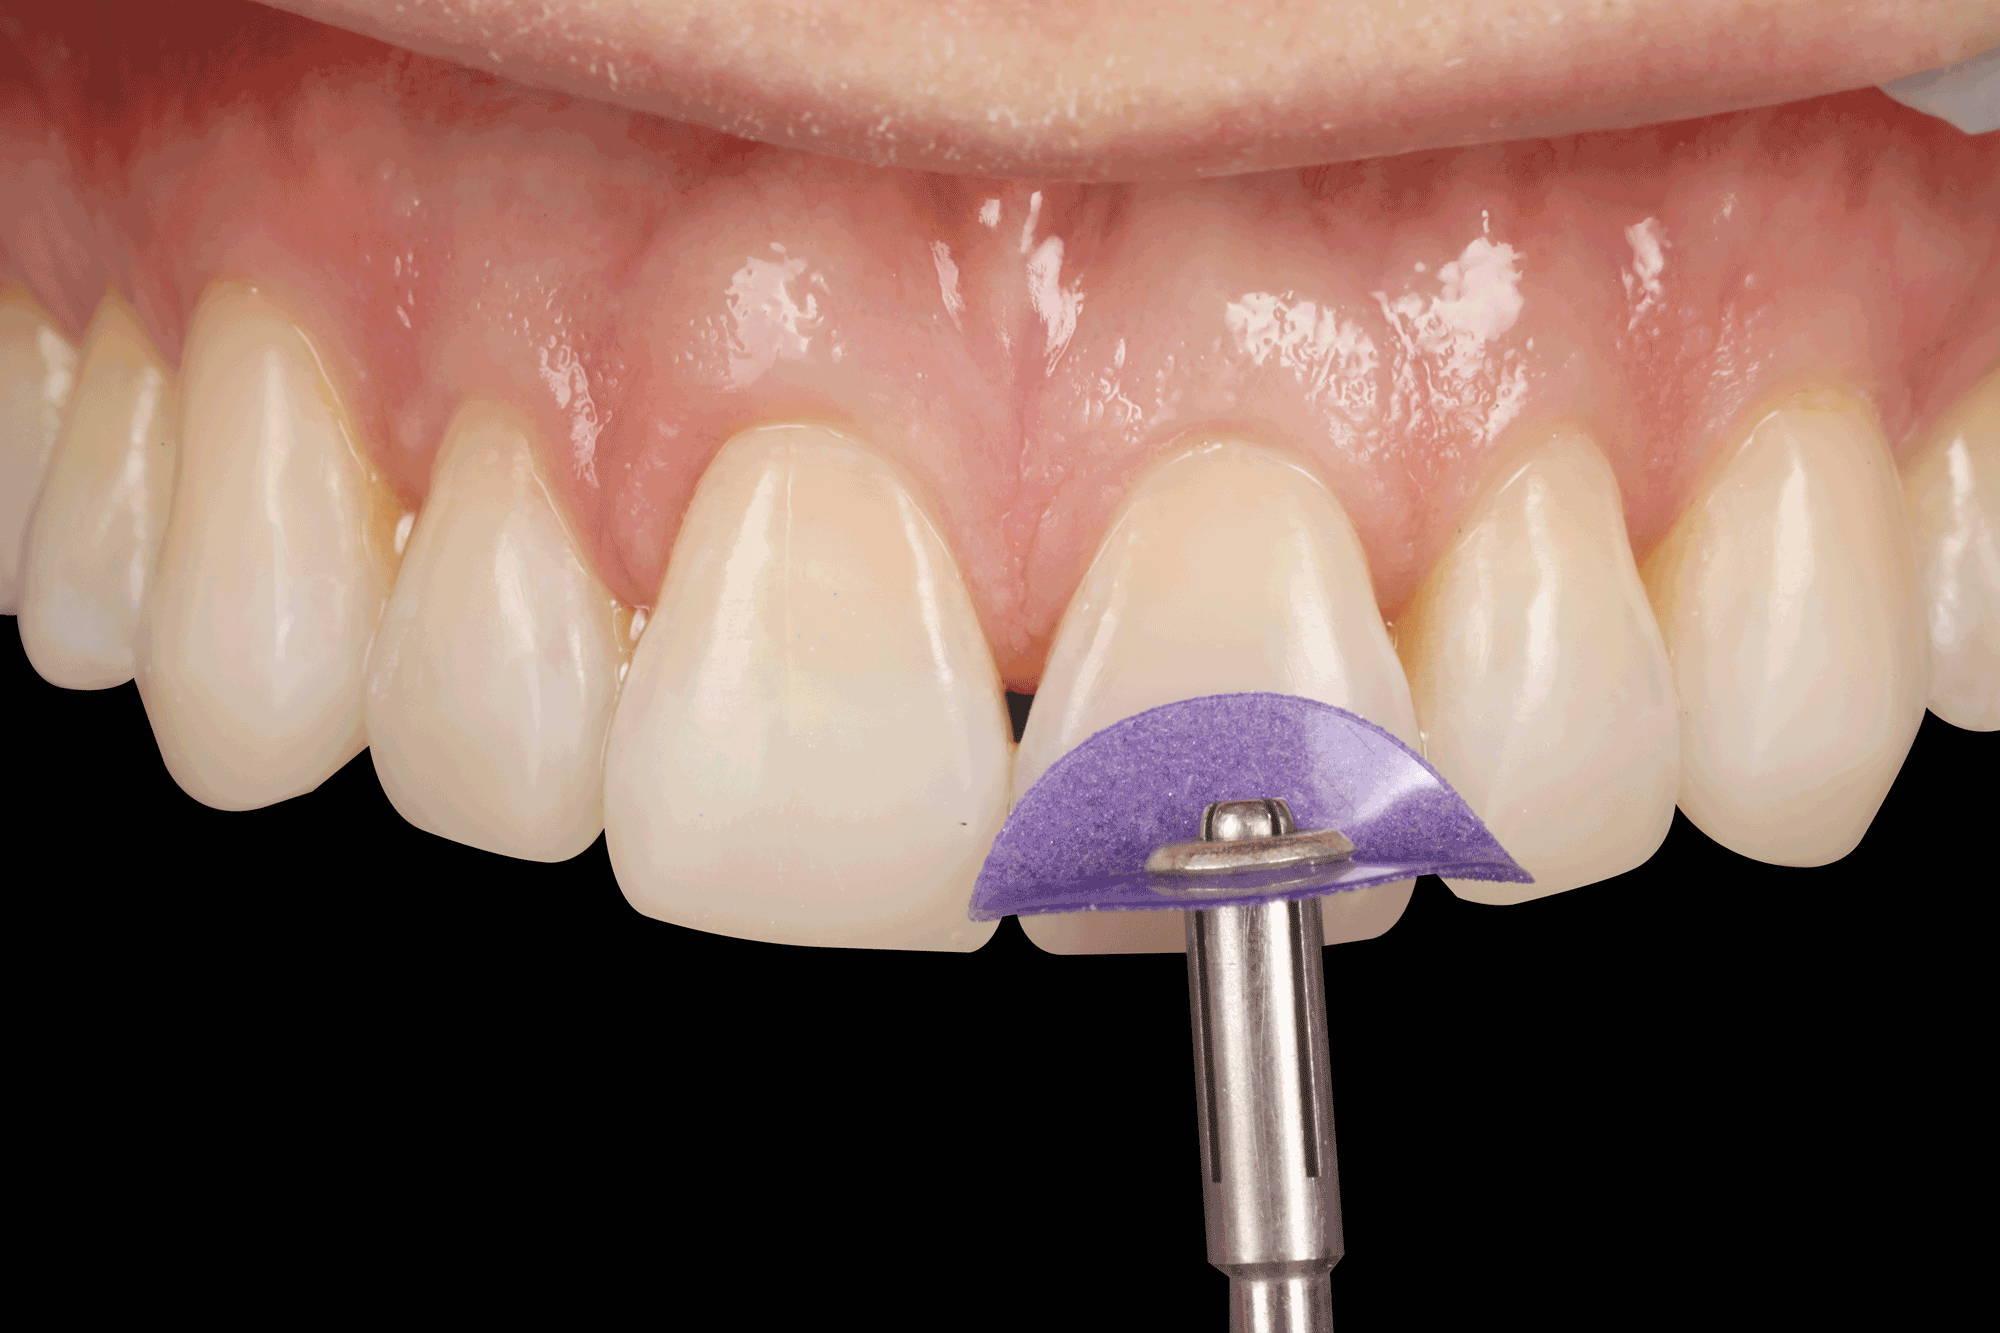 purple polisher polishing central incisor